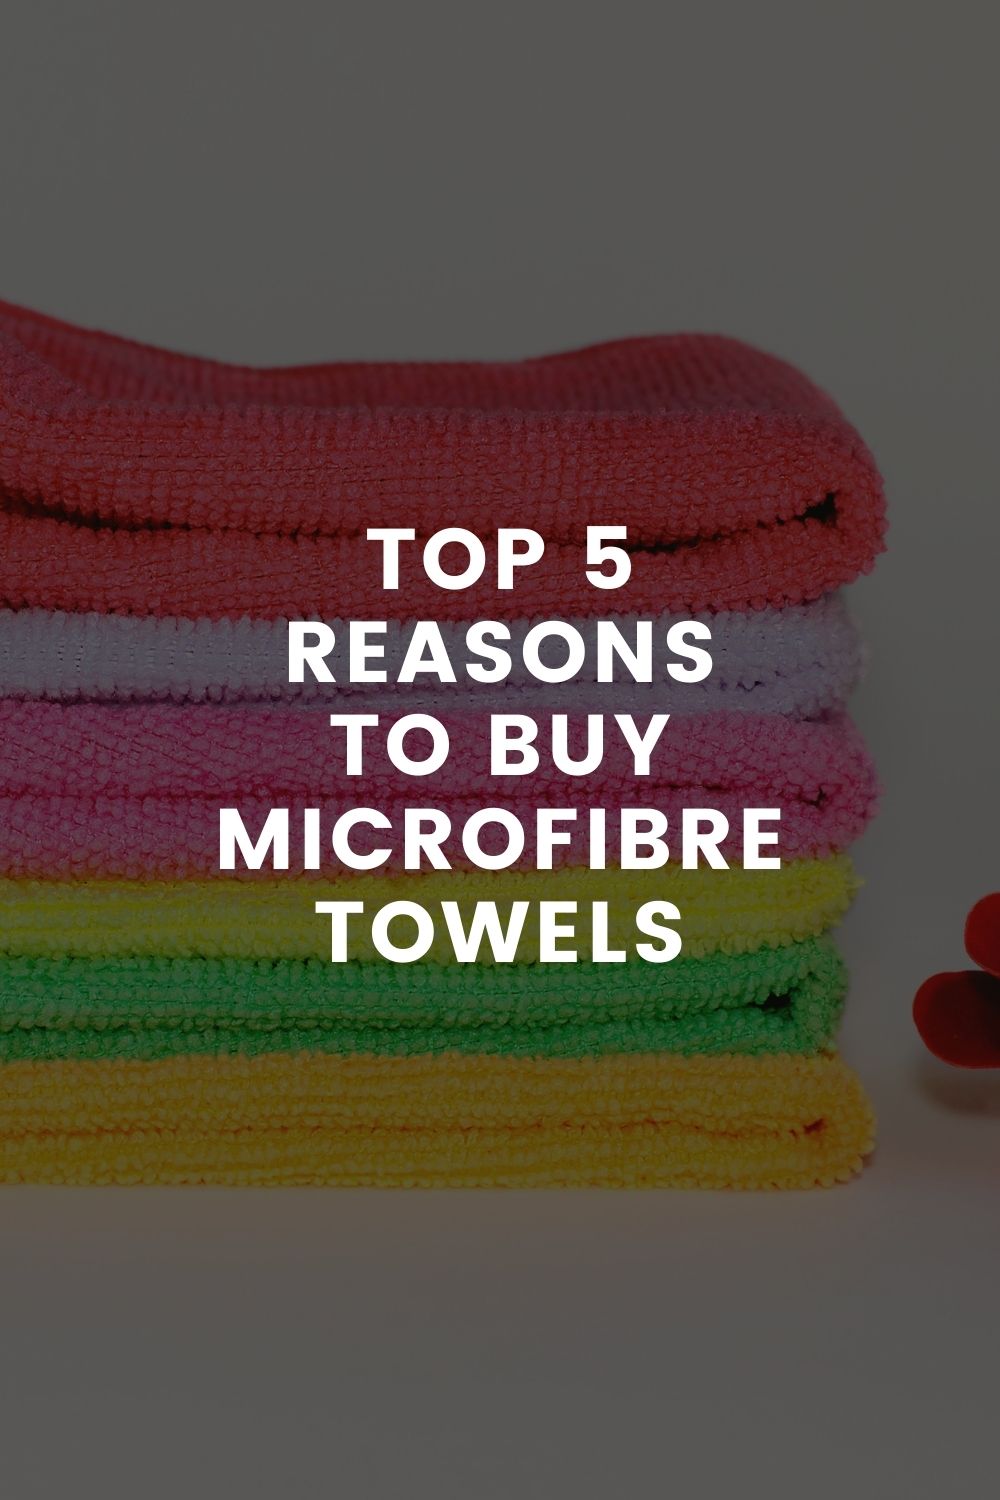 Top 5 Reasons to Buy Microfibre Towels